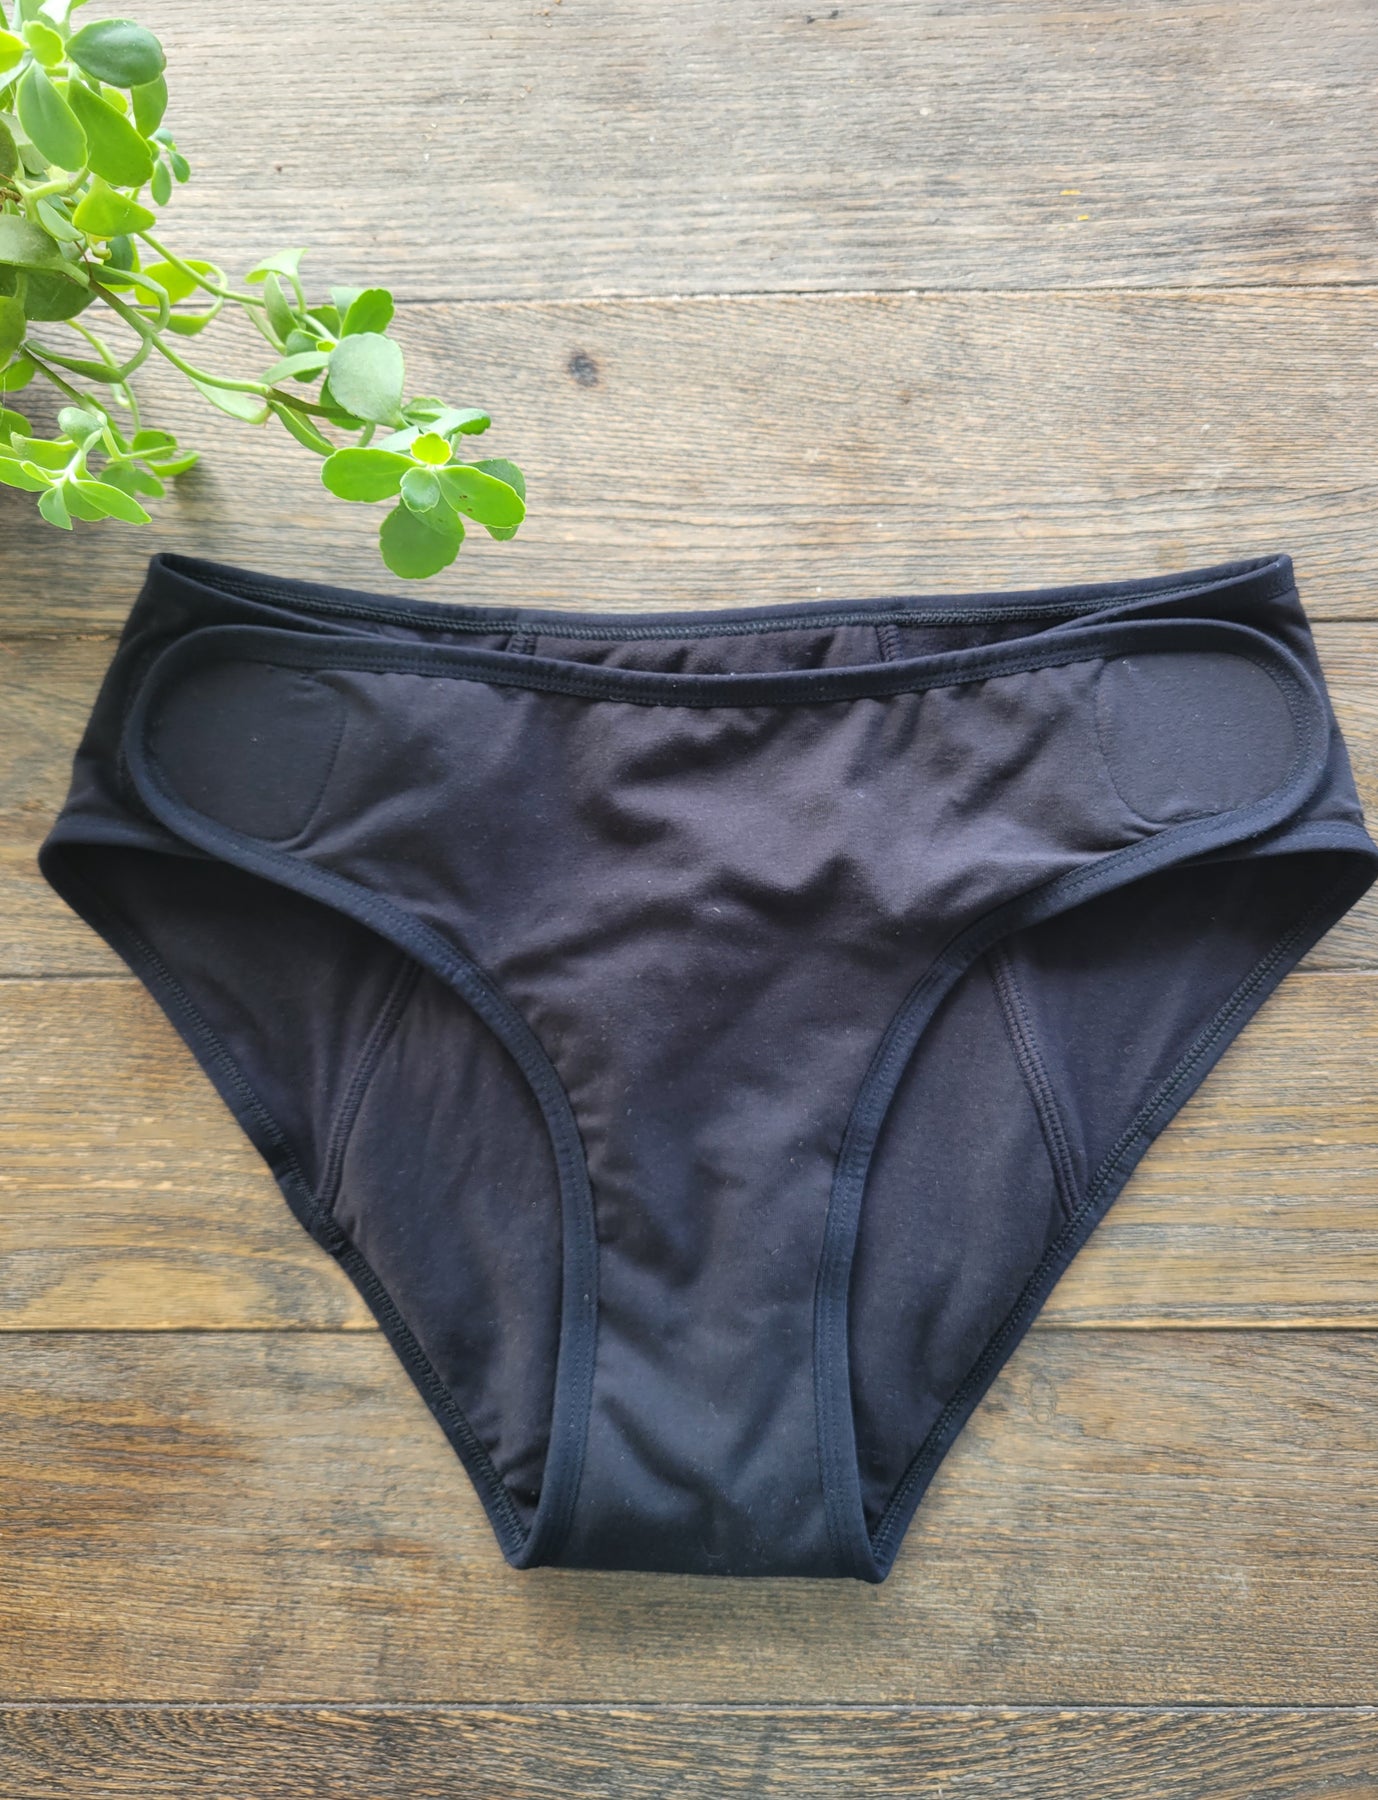 Moisture absorbing underwear with velcro side closures